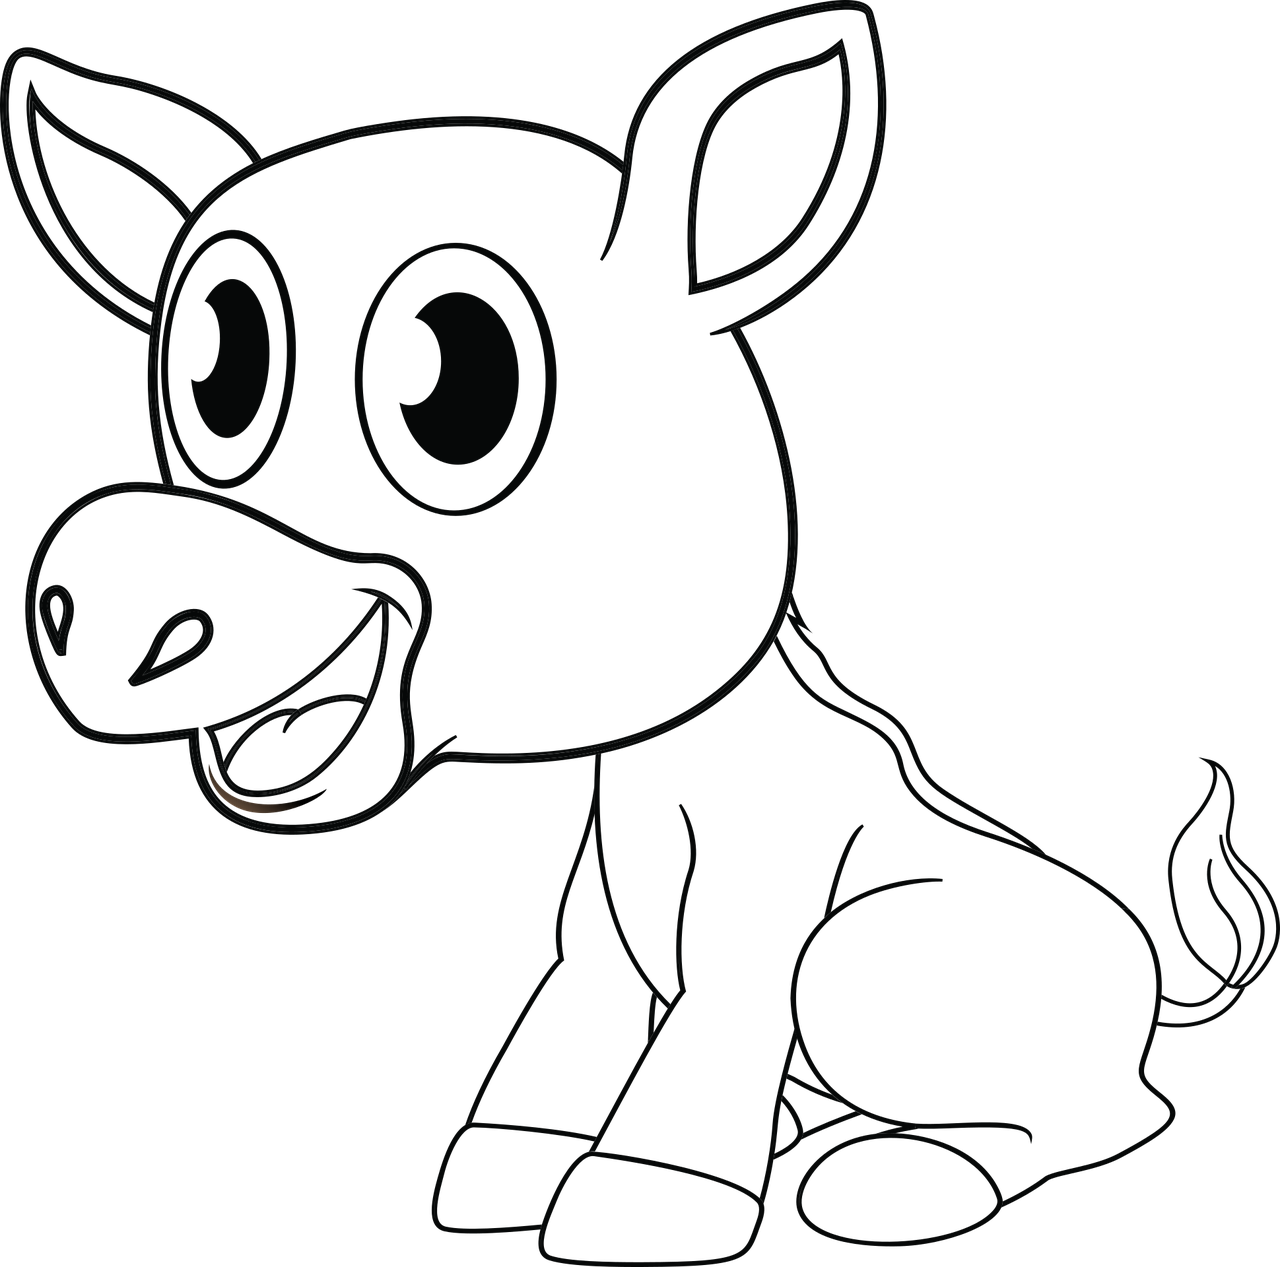 a drawing of a pig on a black background, lineart, tumblr, conceptual art, 3 d littlest pet shop horse, outline glow lens flare, widescreen shot, !subtle smiling!